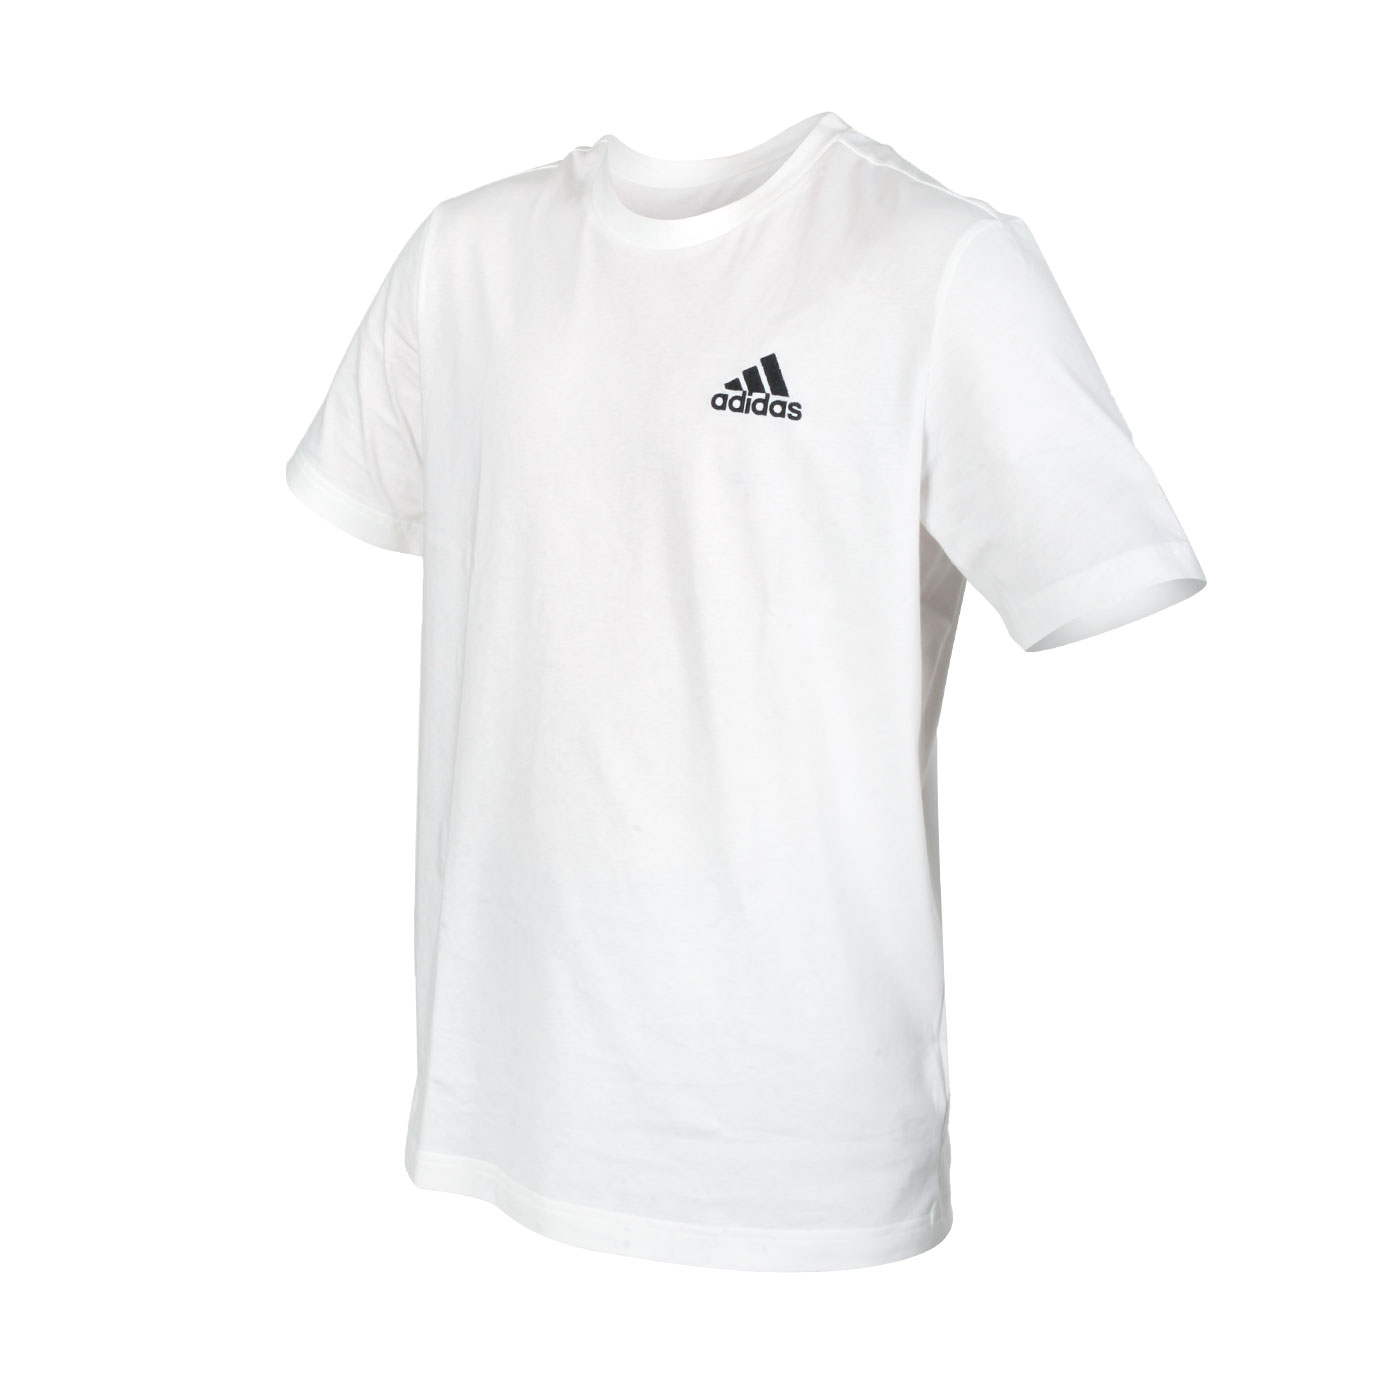 ADIDAS 男款短袖T恤 GK9640 - 白黑